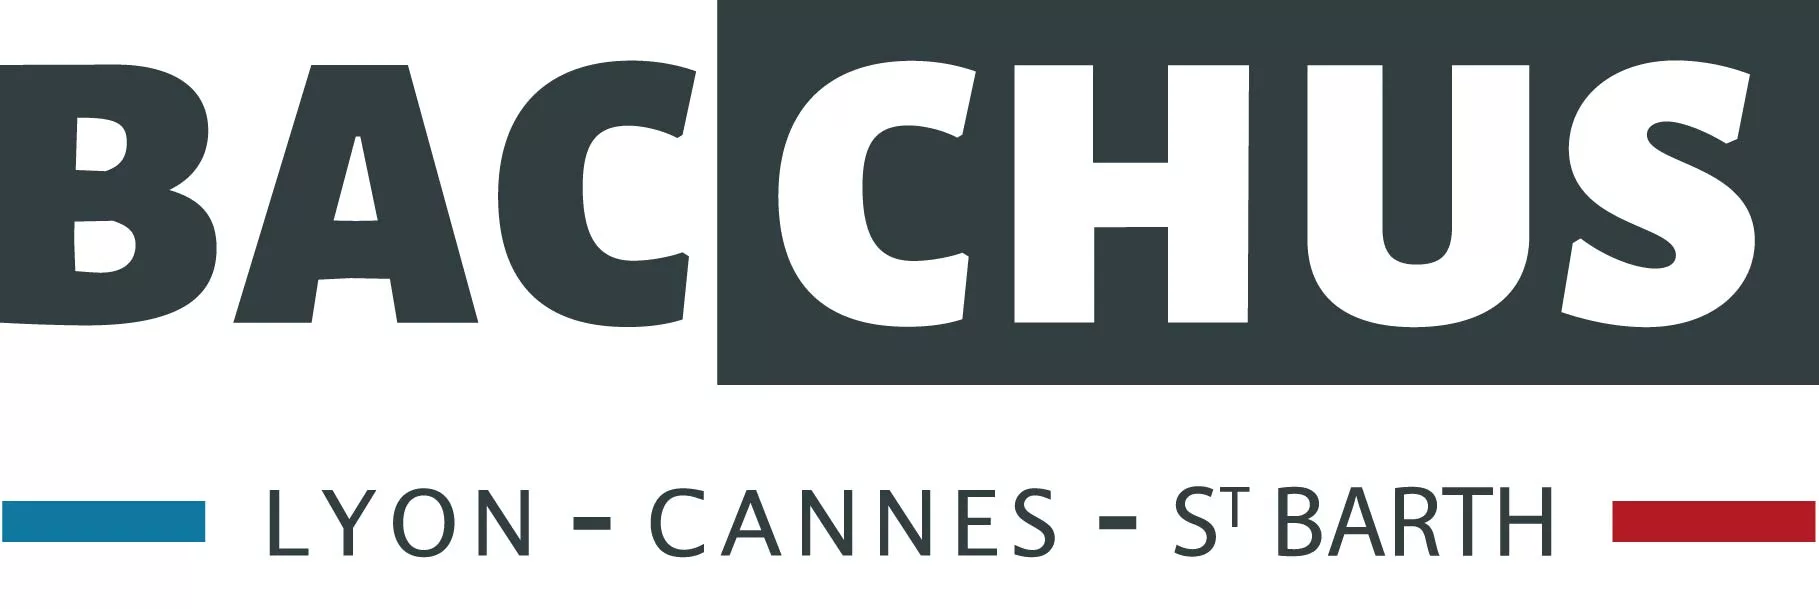 bacchus logo